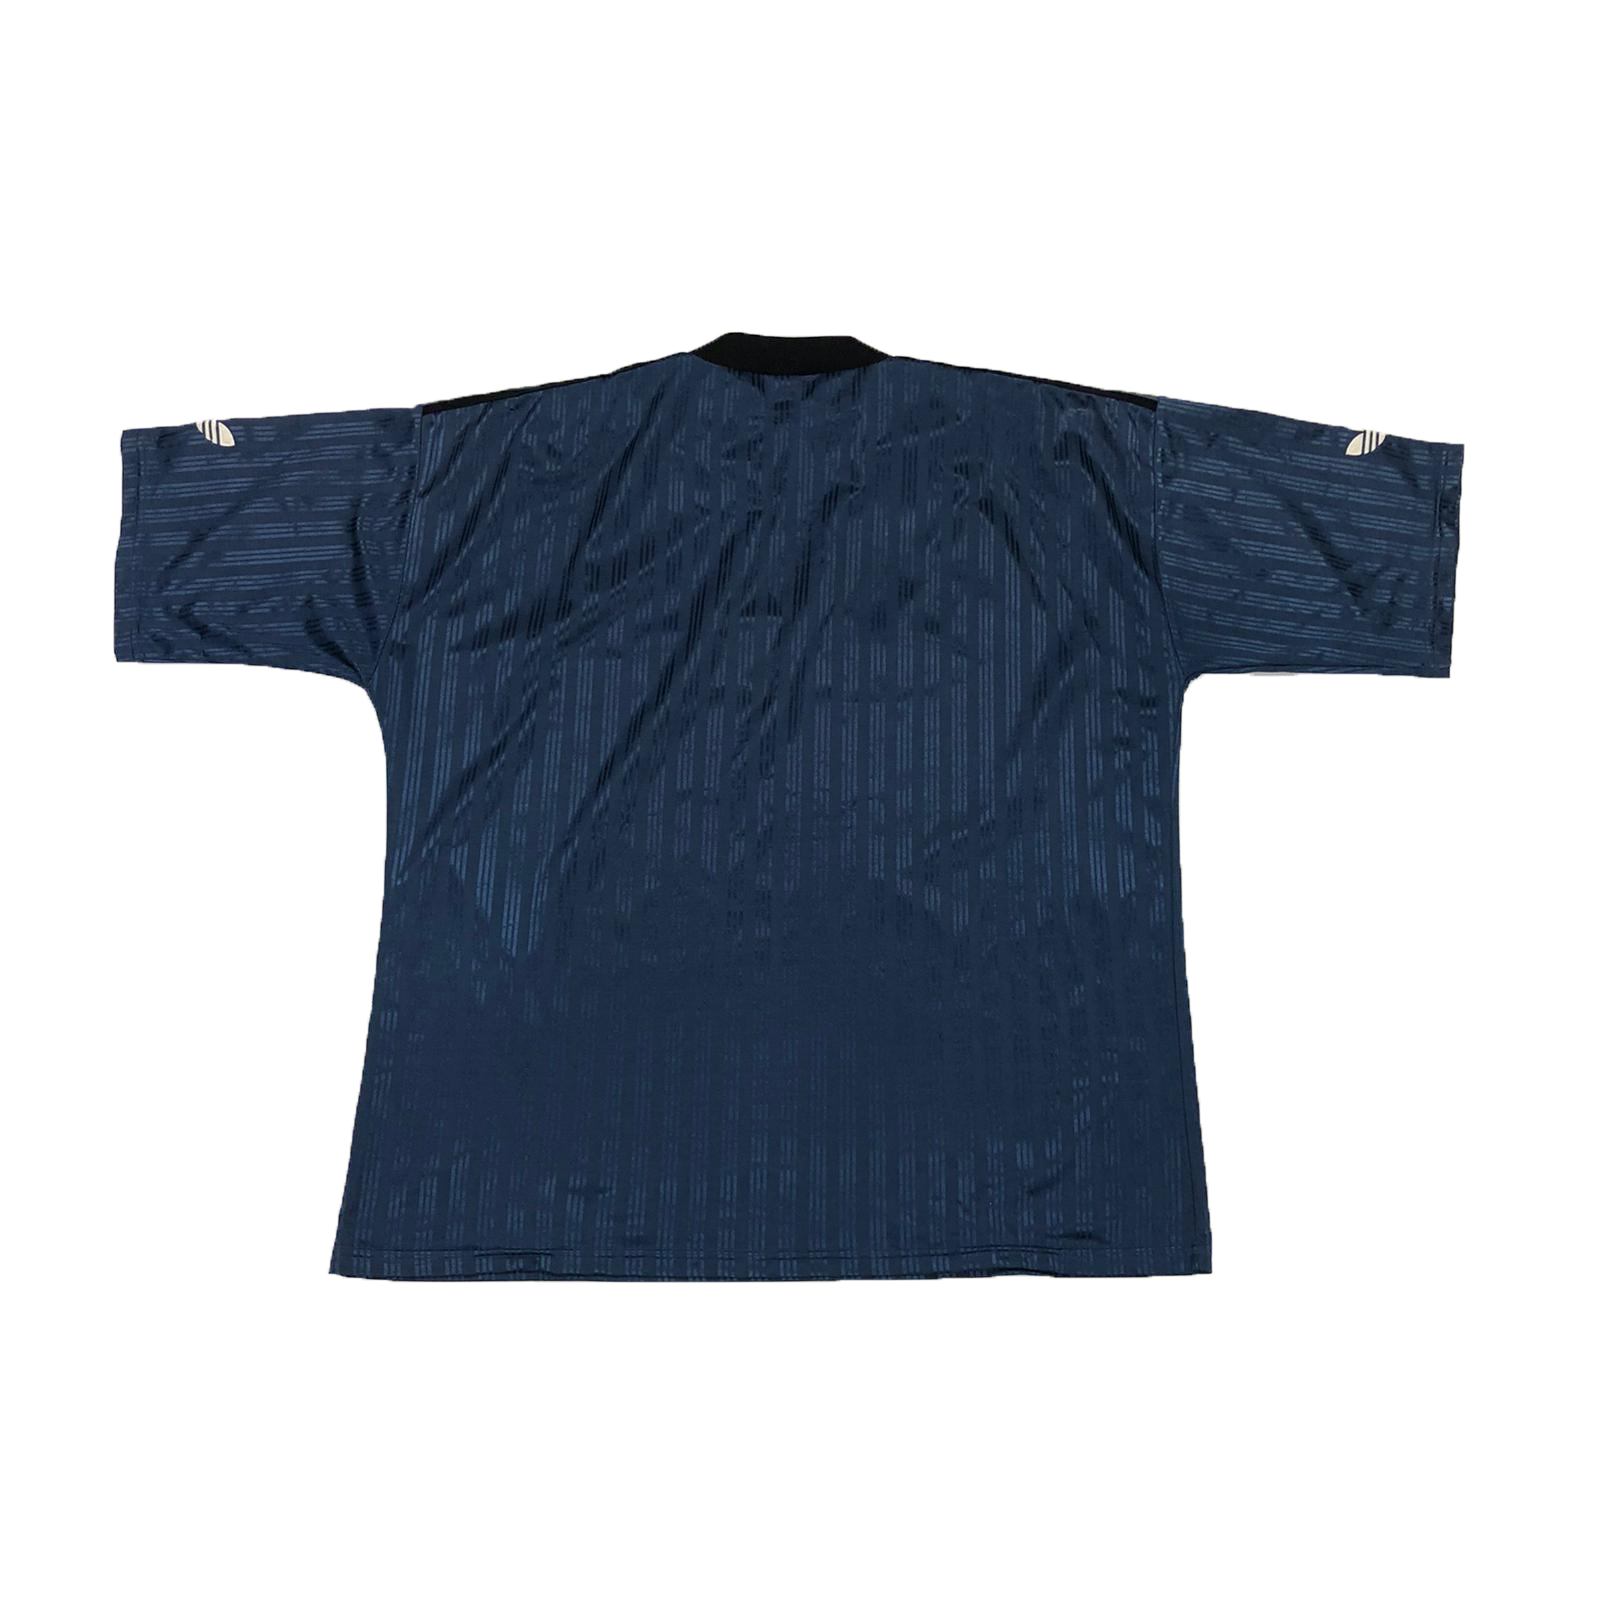 90's Adidas t-shirt